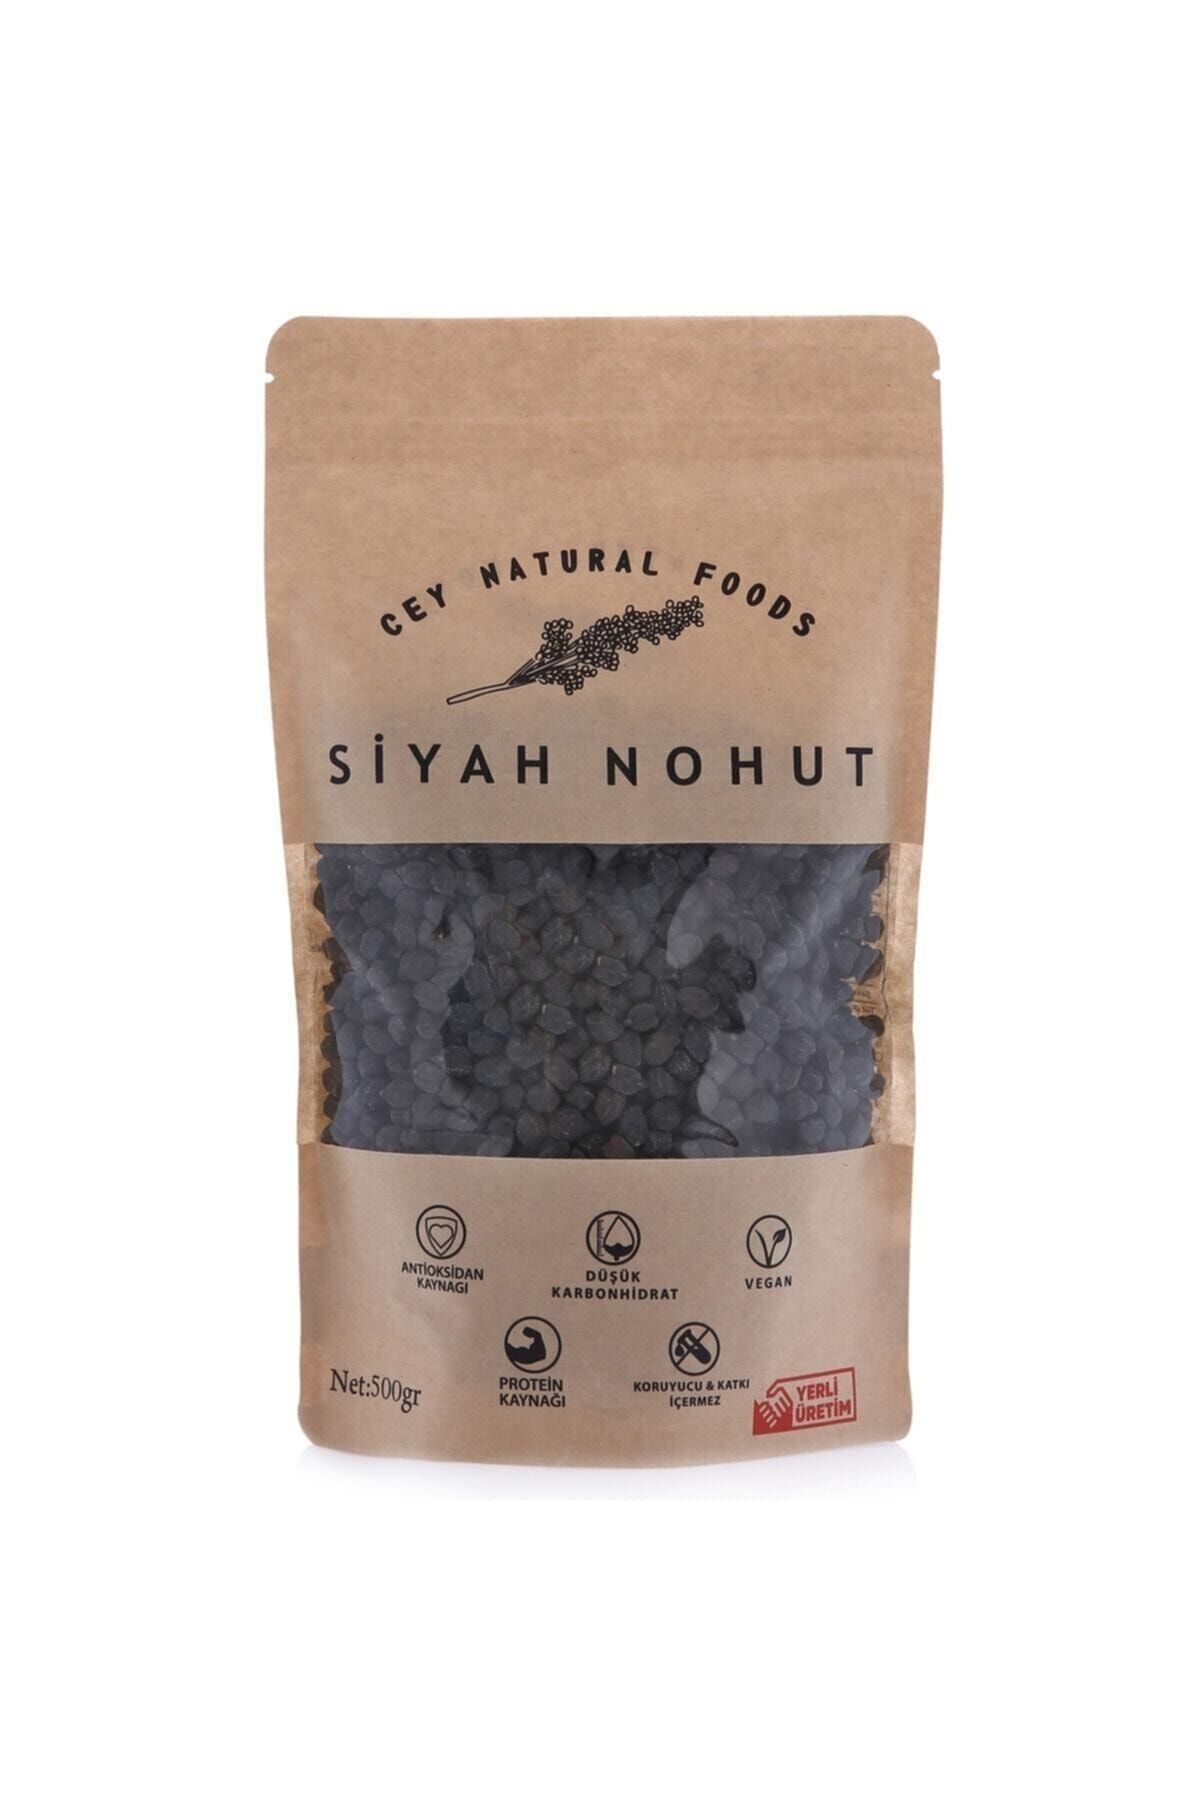 Cey Natural Foods Siyah Nohut 500 Gr